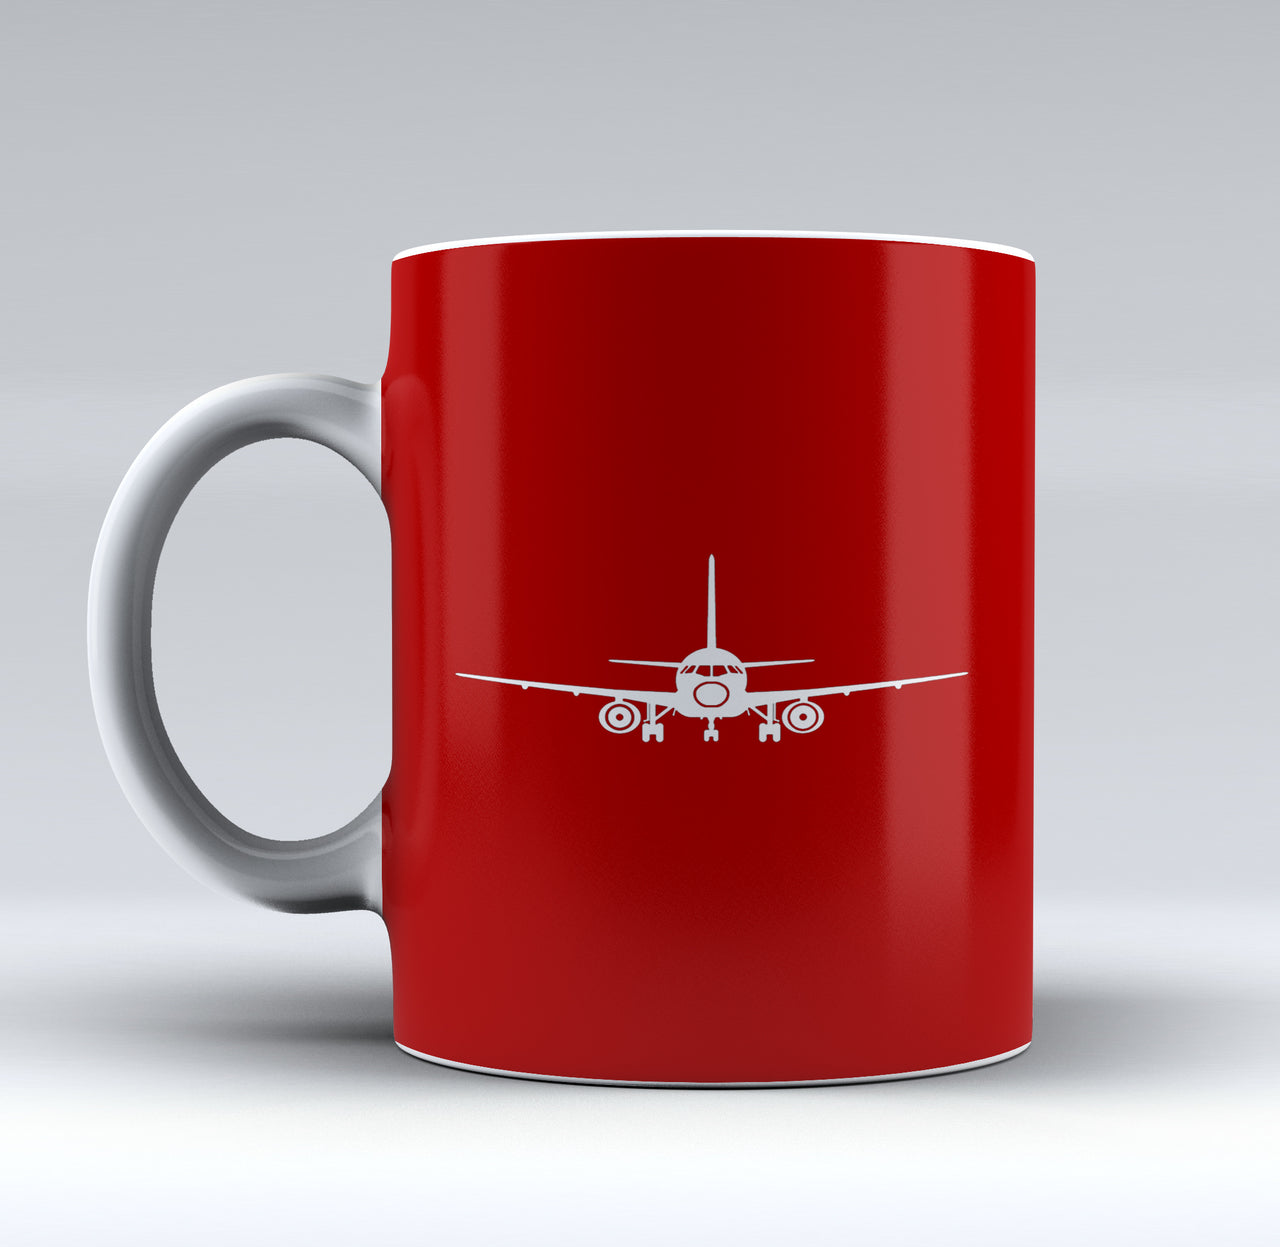 Sukhoi Superjet 100 Silhouette Designed Mugs